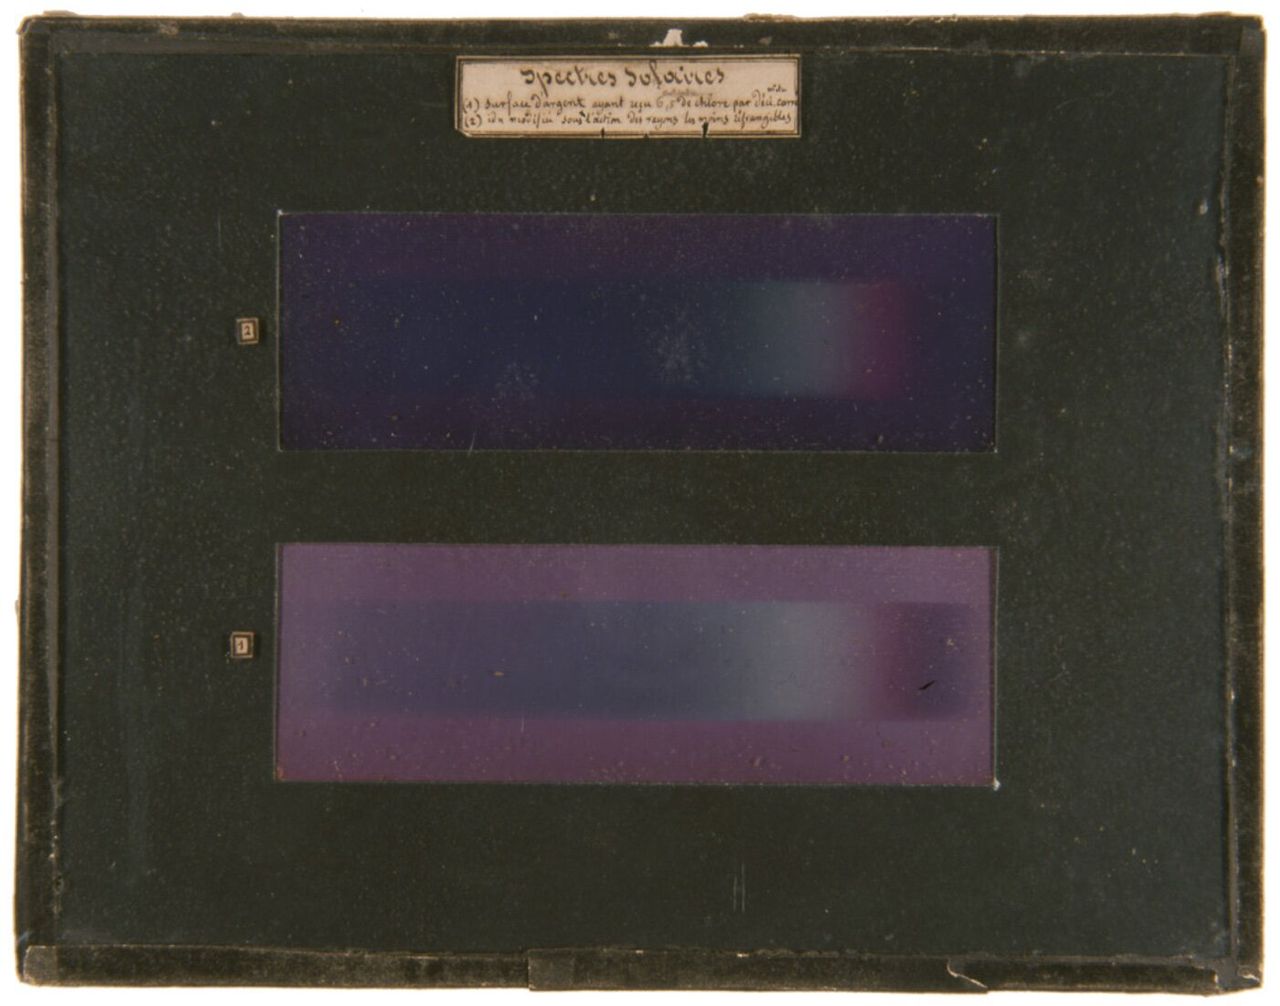 Spektrum solarne Edmonda Becquerela, 1848 roku.